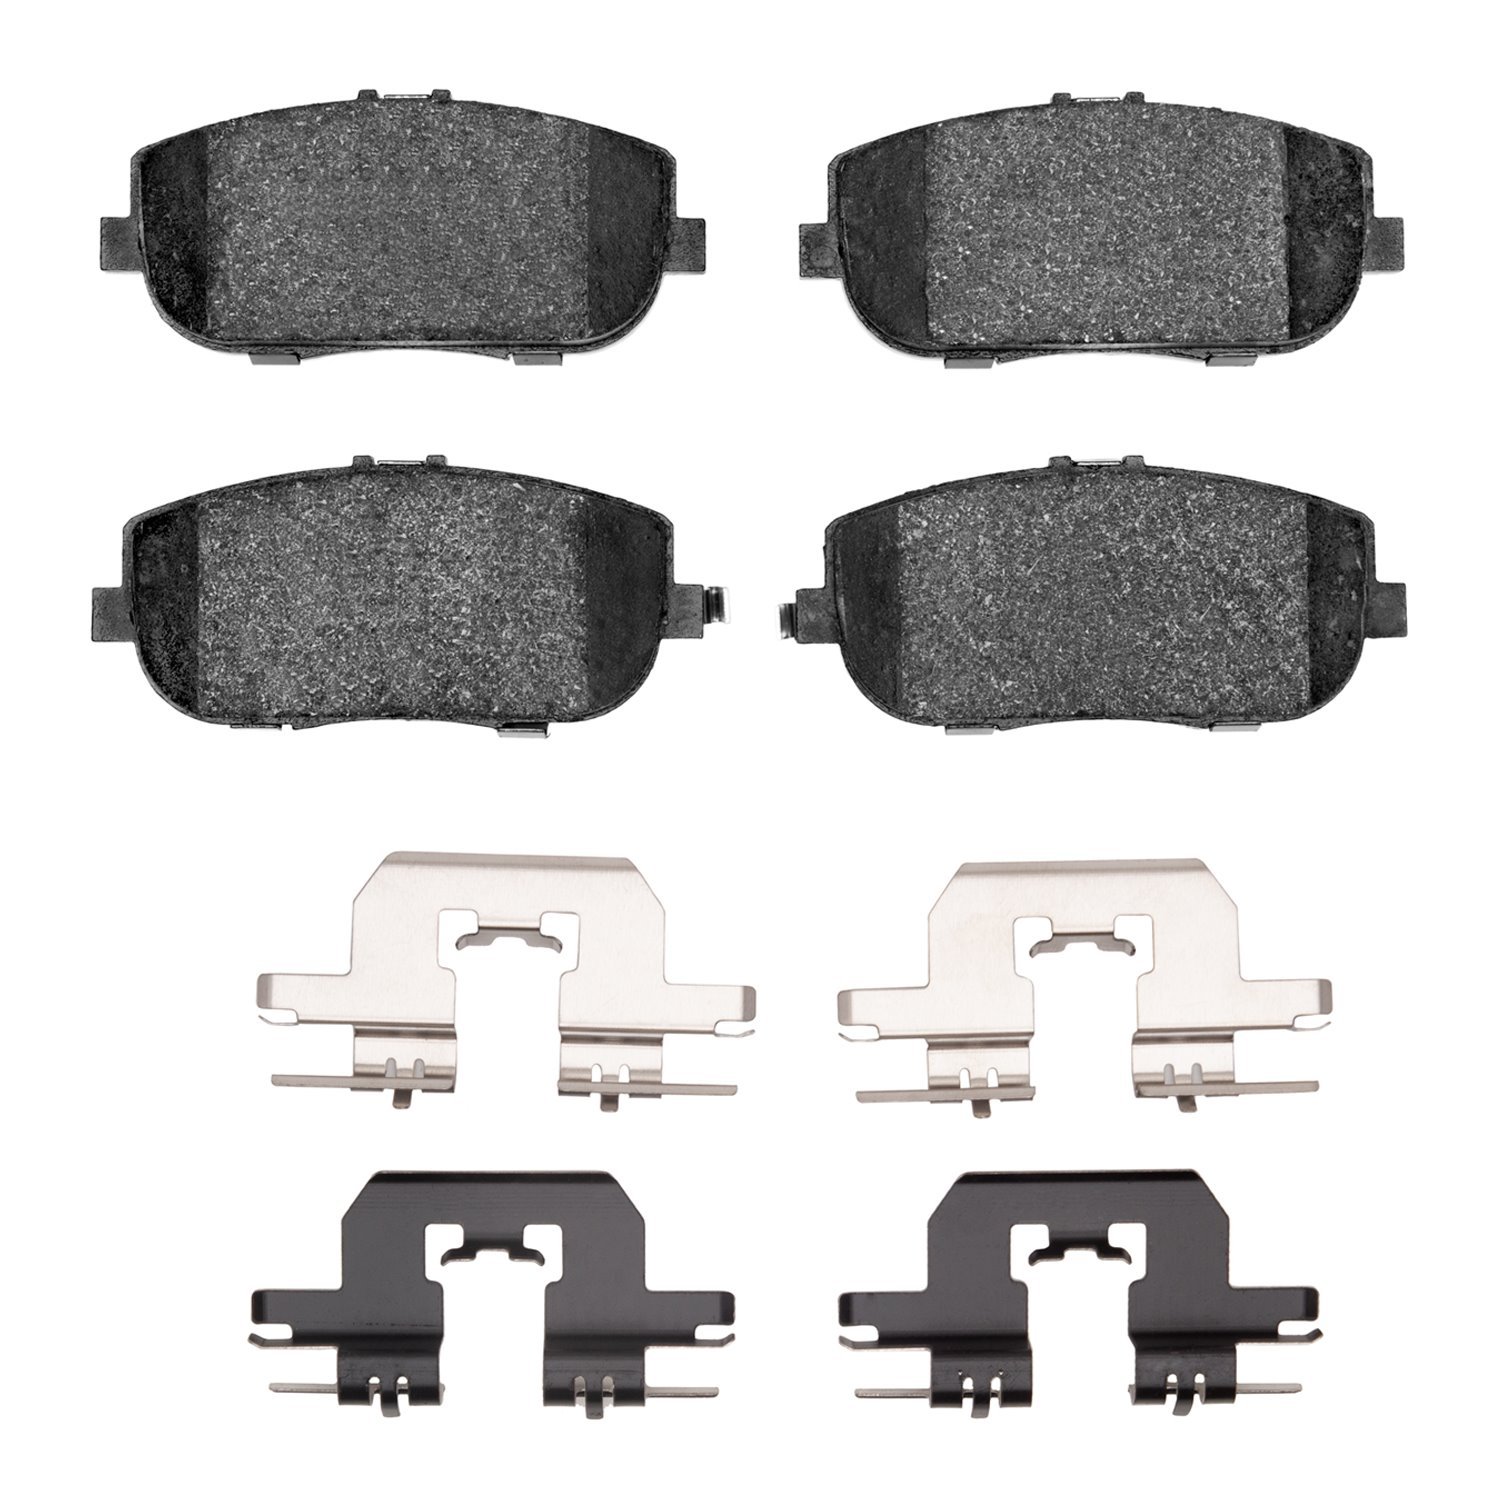 1551-1180-01 5000 Advanced Ceramic Brake Pads & Hardware Kit, Fits Select Multiple Makes/Models, Position: Rear